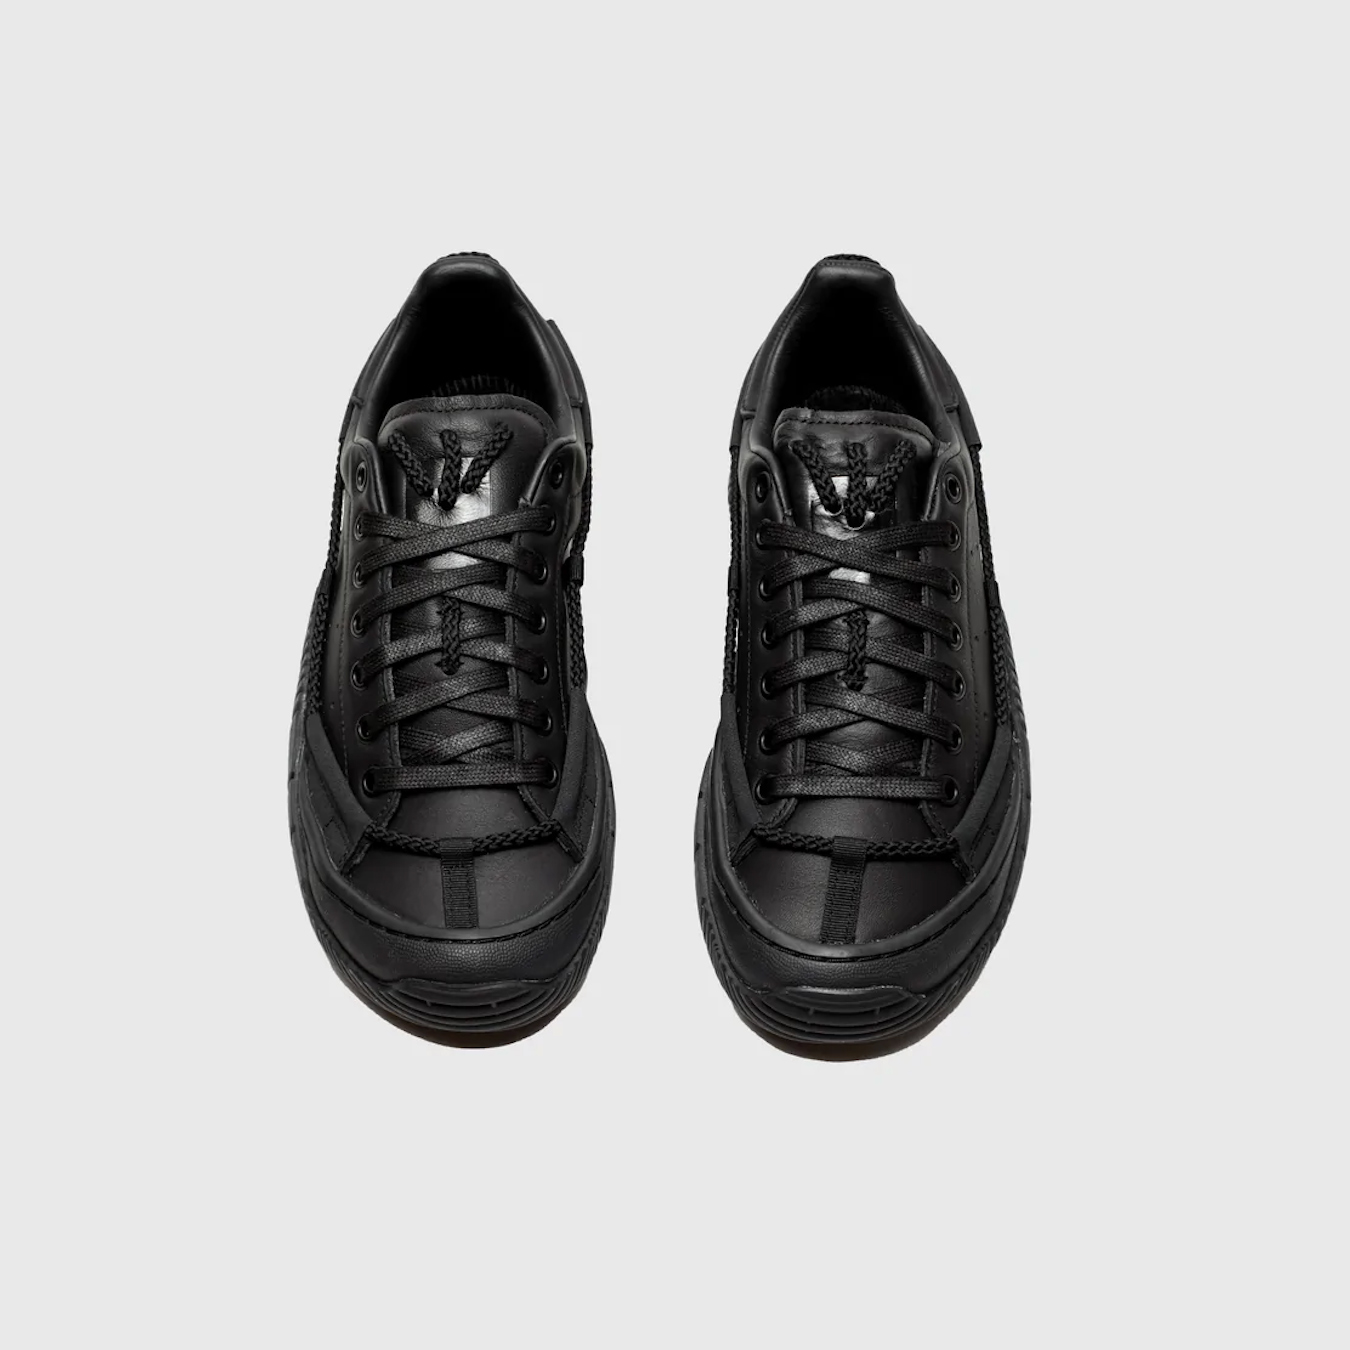 Craig Green x adidas Scuba Stan “Core Black” GZ4643